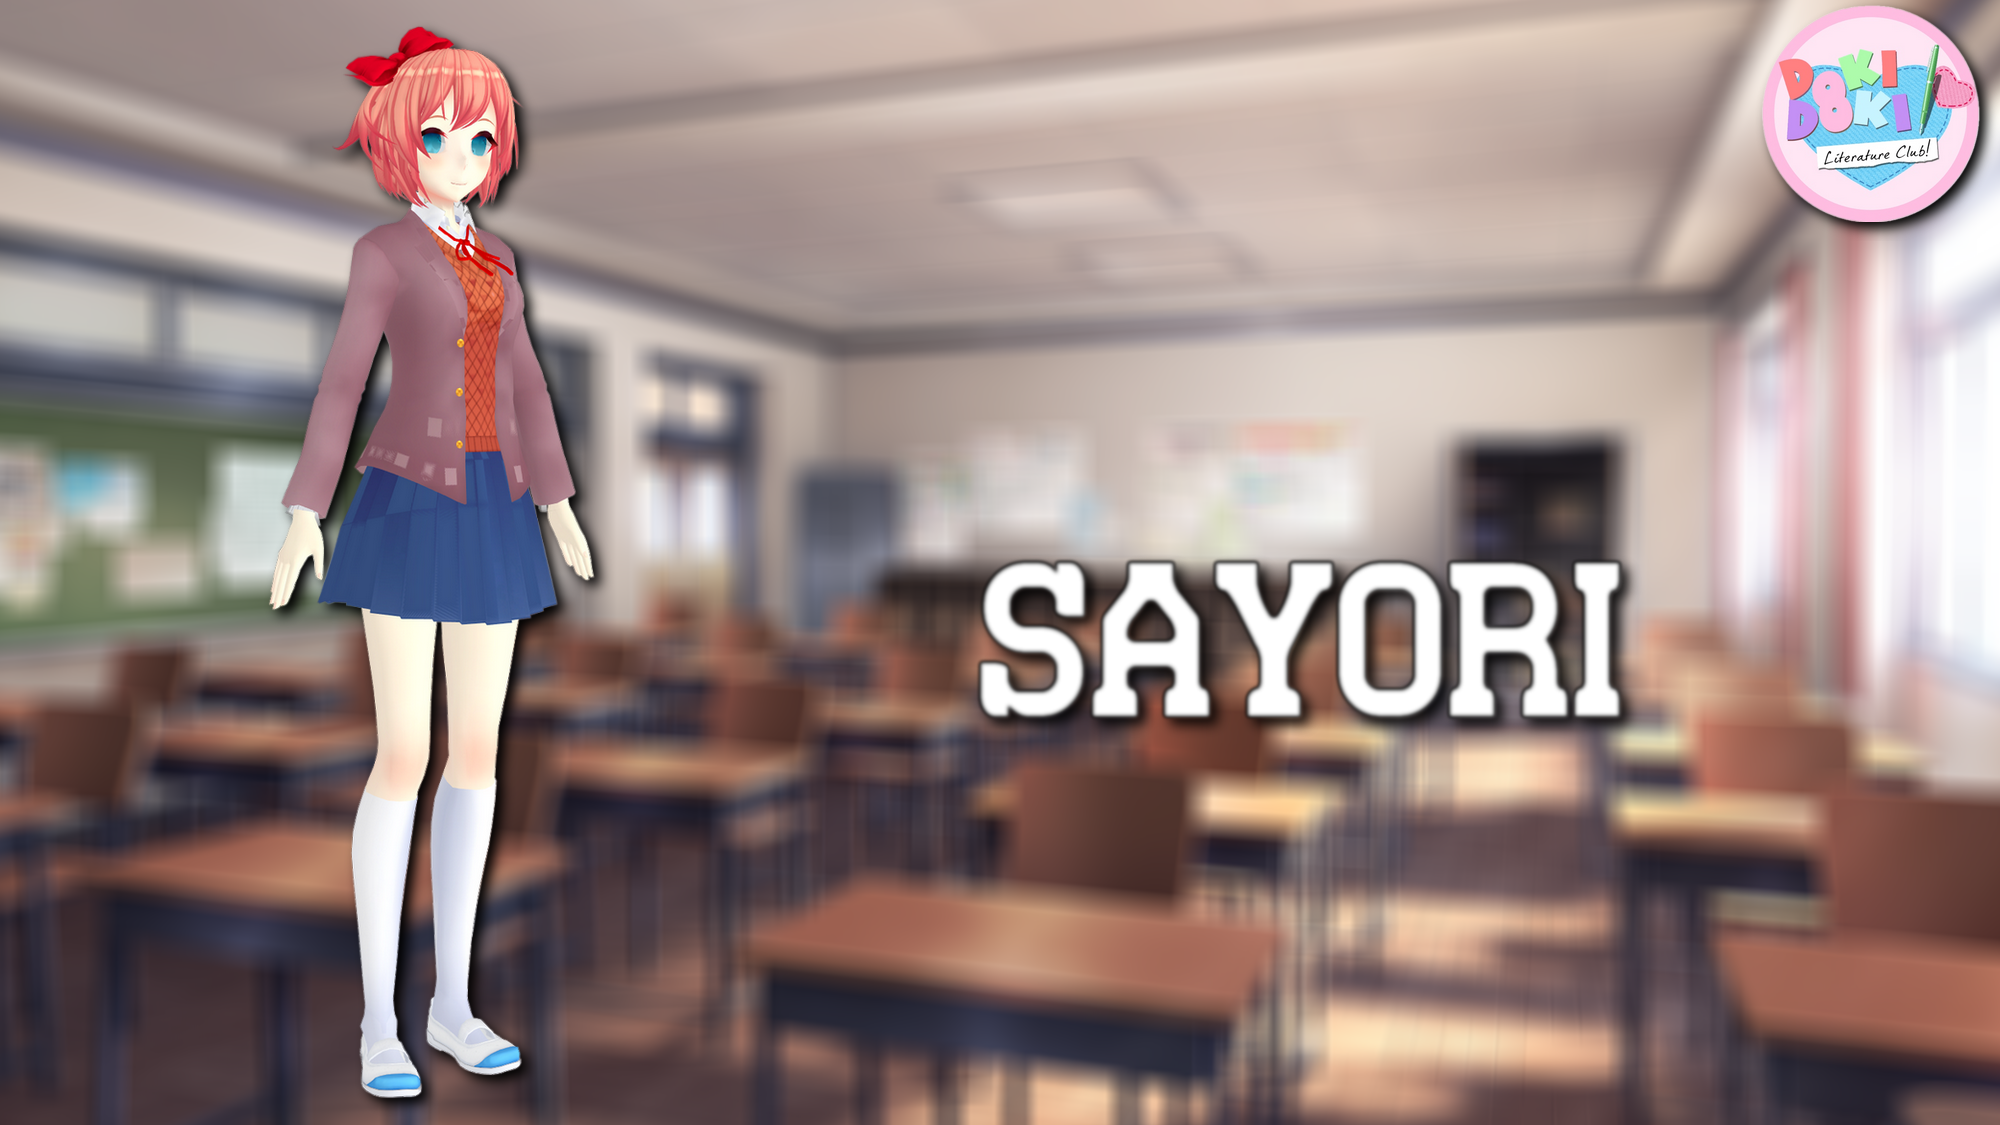 Download Sayori from Doki Doki Literature Club for GTA 5